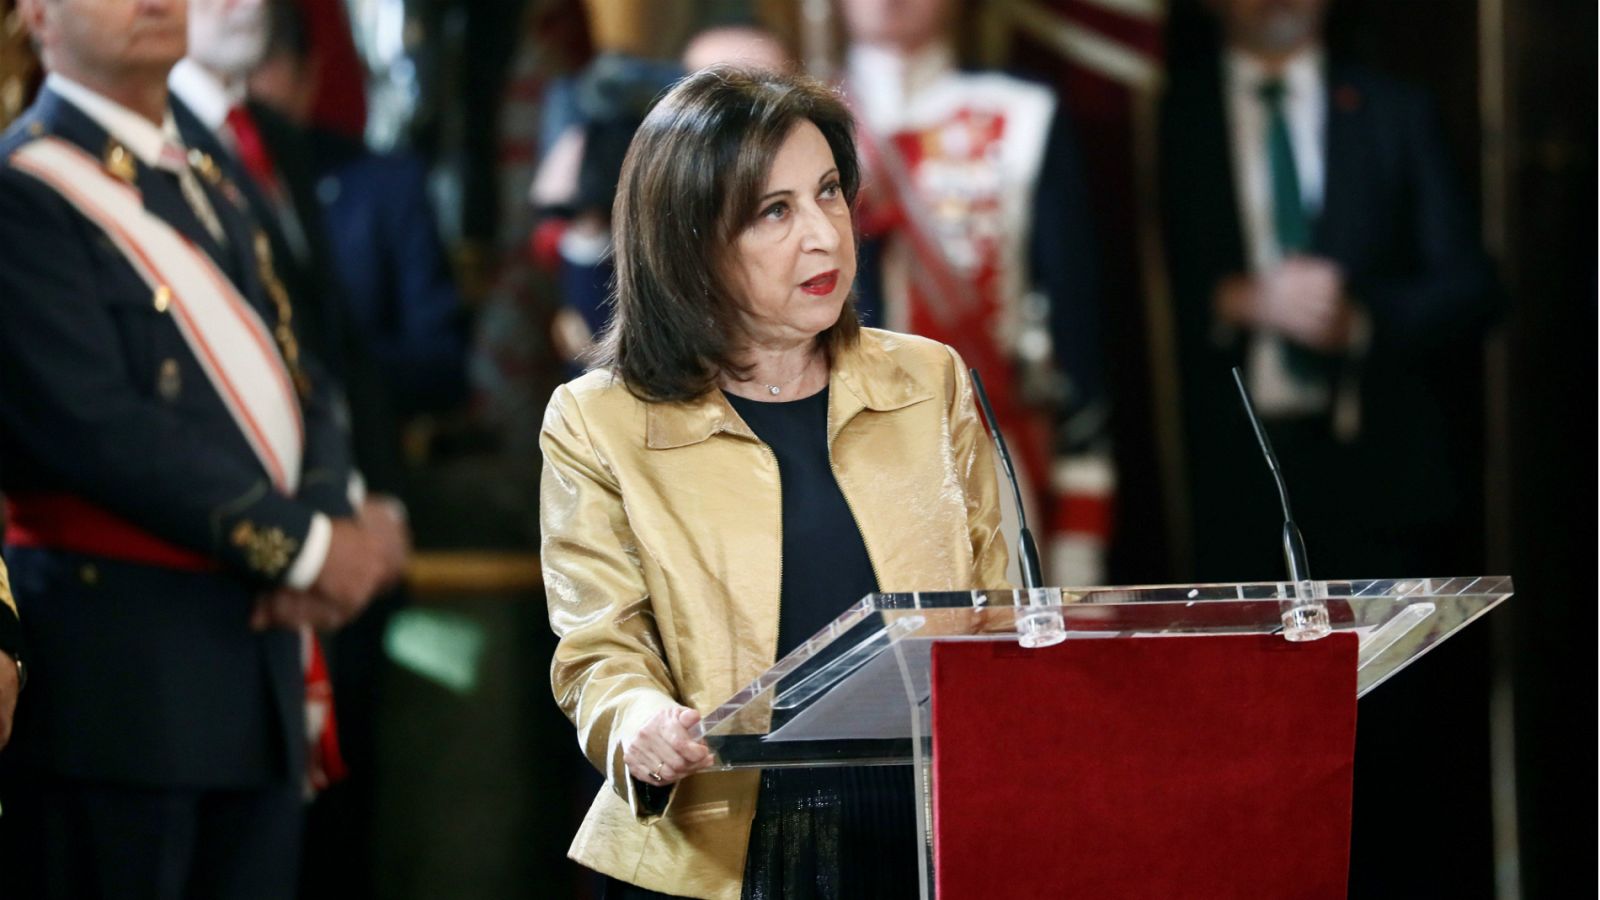 Discurso completo de Margarita Robles en la Pascua Militar 2020 - RTVE.es